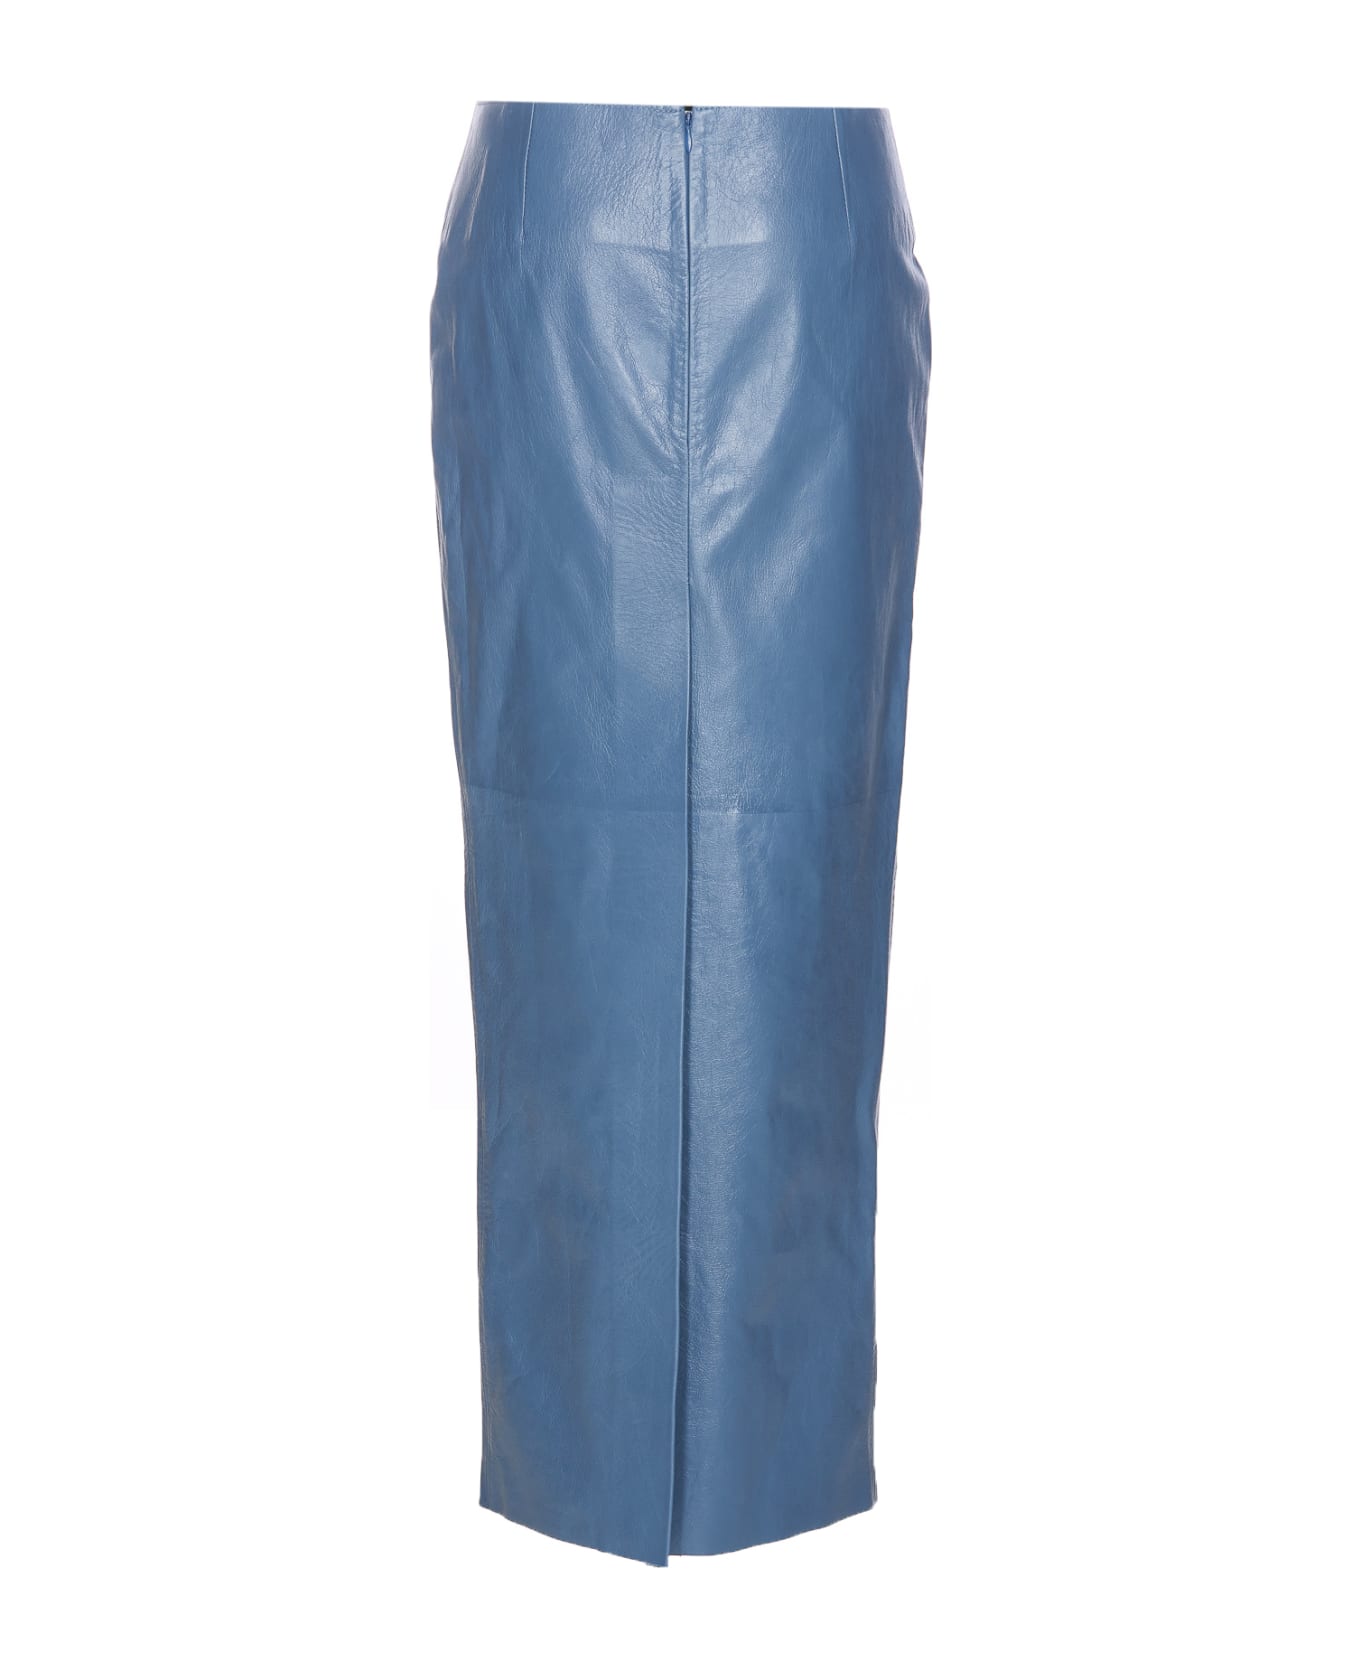 Marni Leather Skirt - Blue スカート